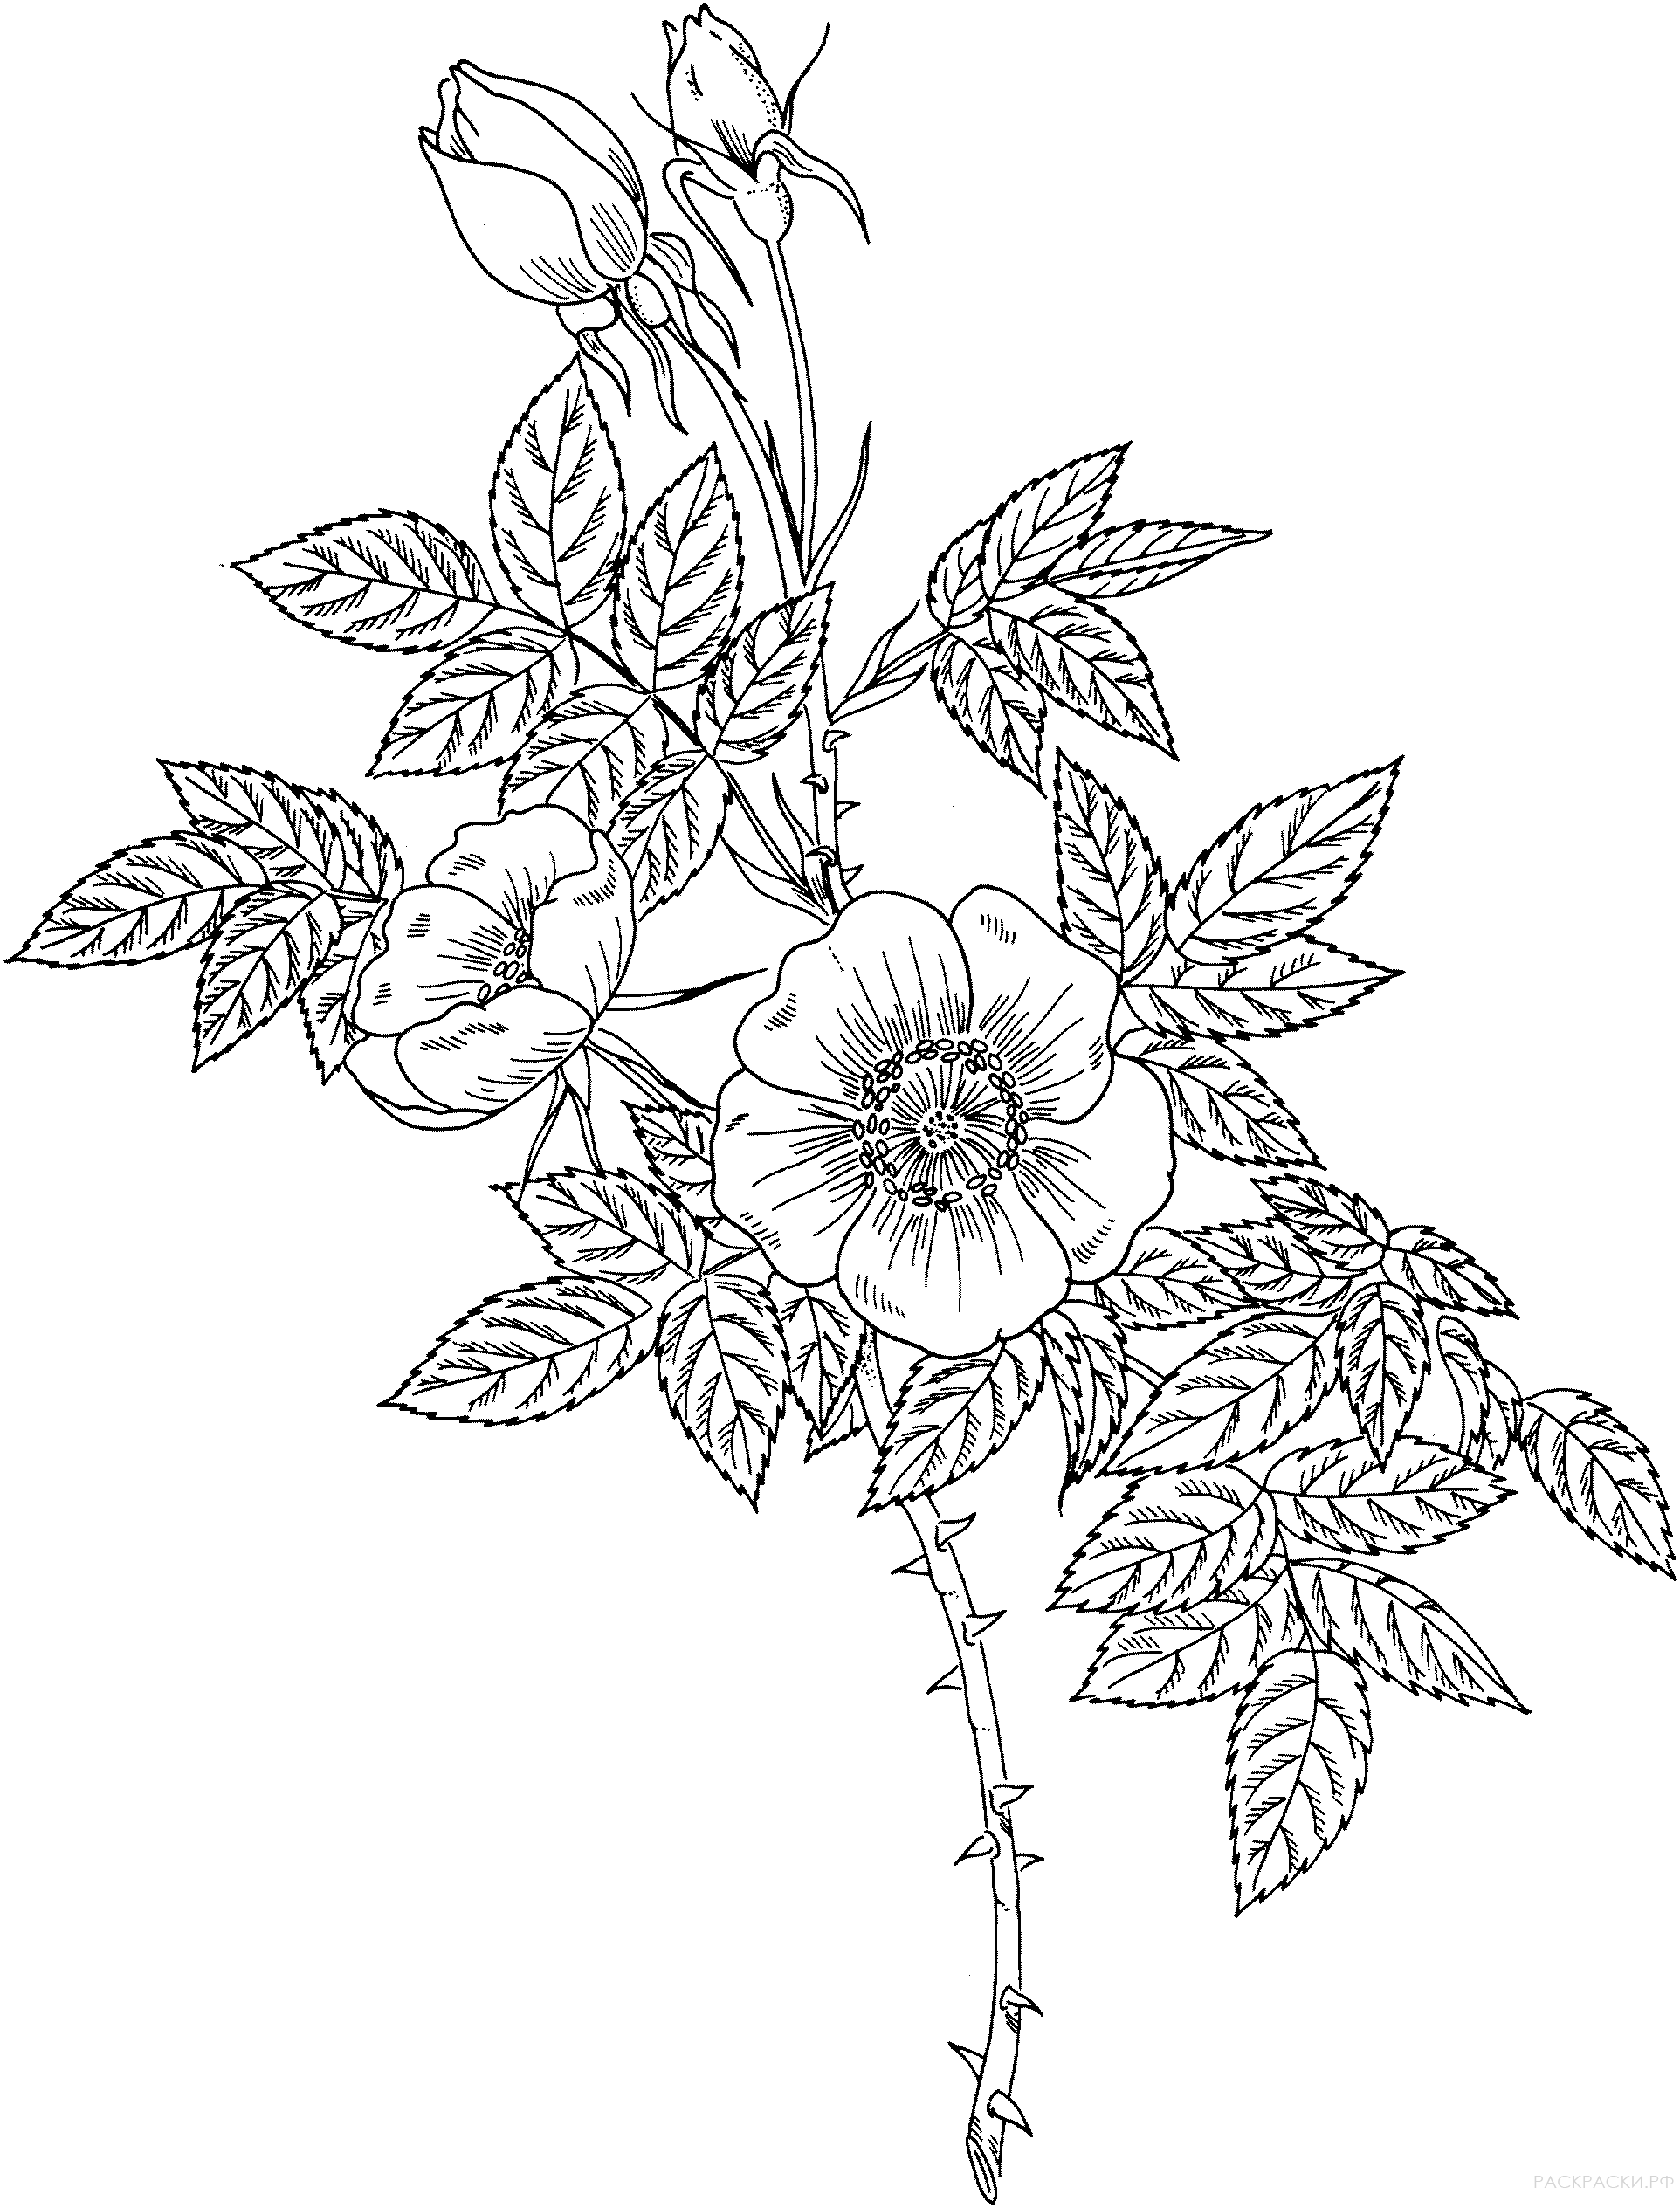 Раскраска Цветы шиповника на стебле